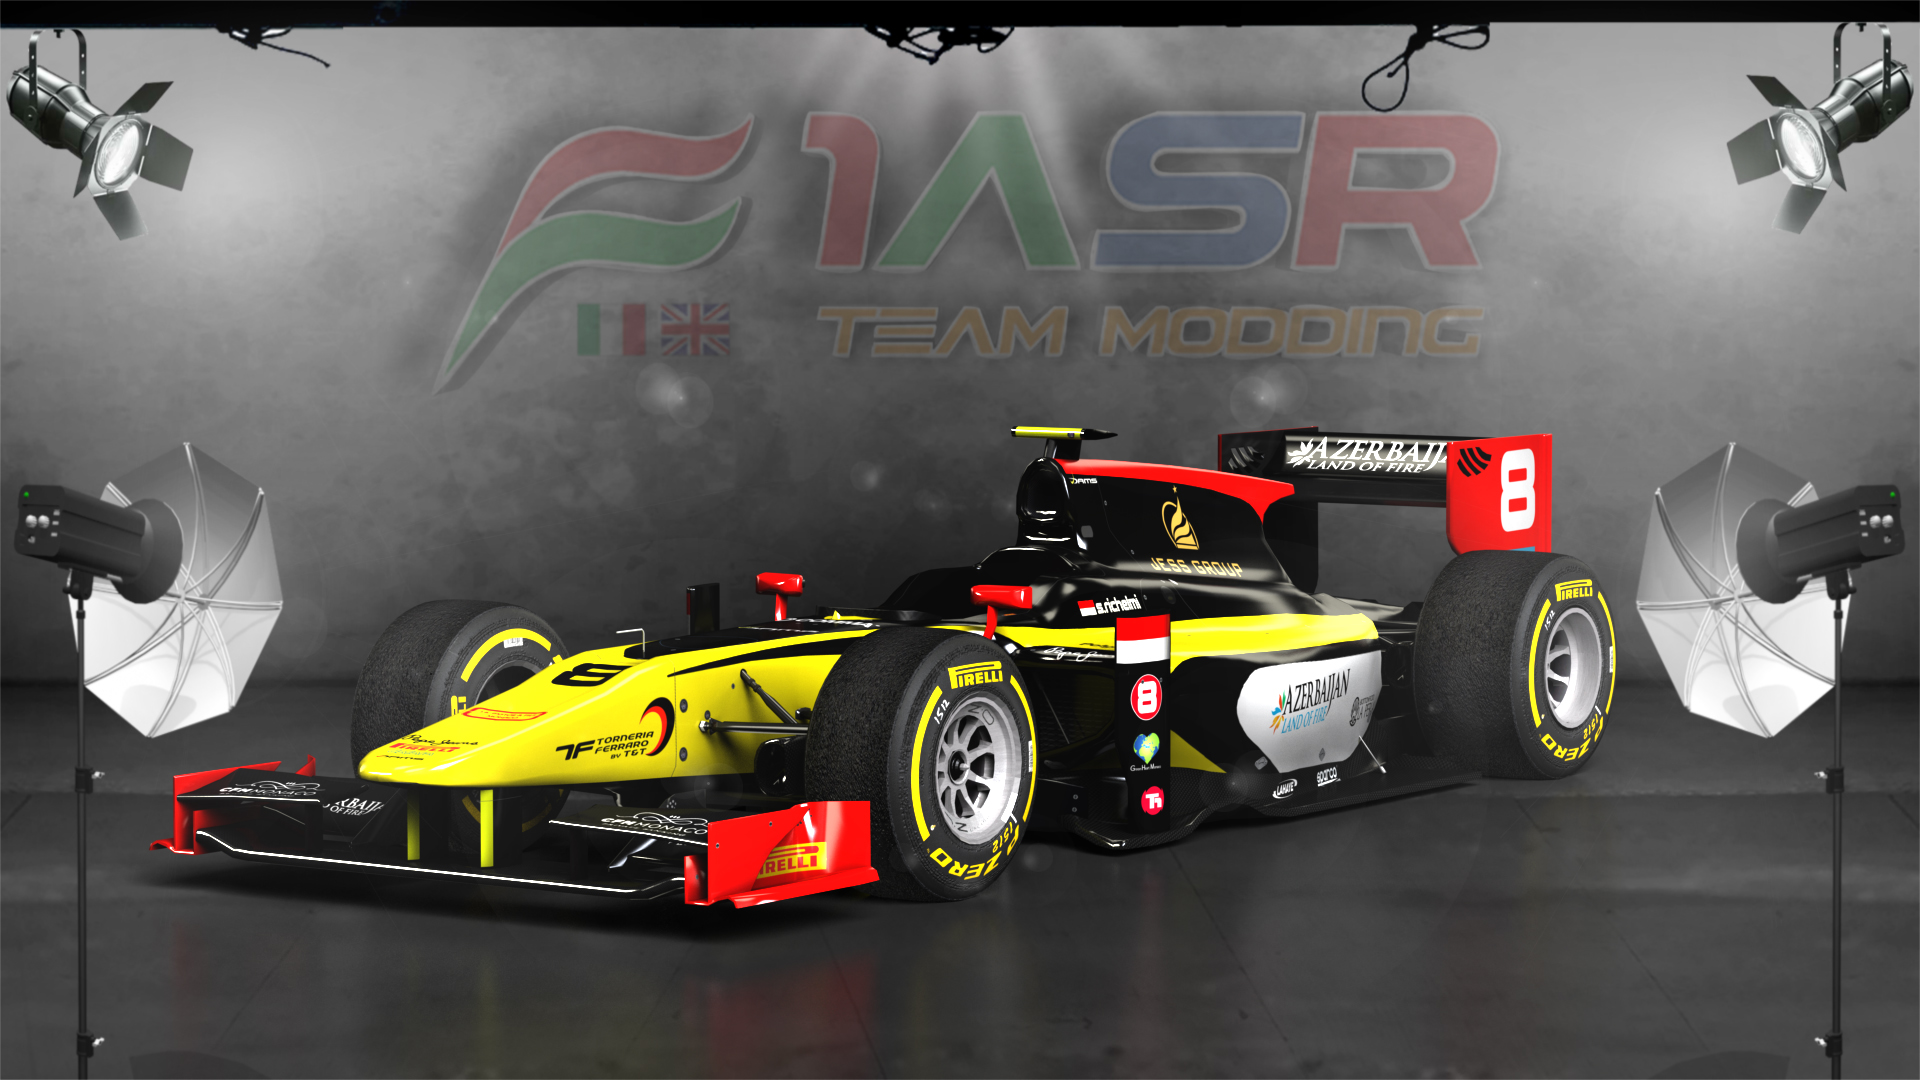 F1 ASR 2014 GP2 , Dams livery #8 Studio Render.jpg